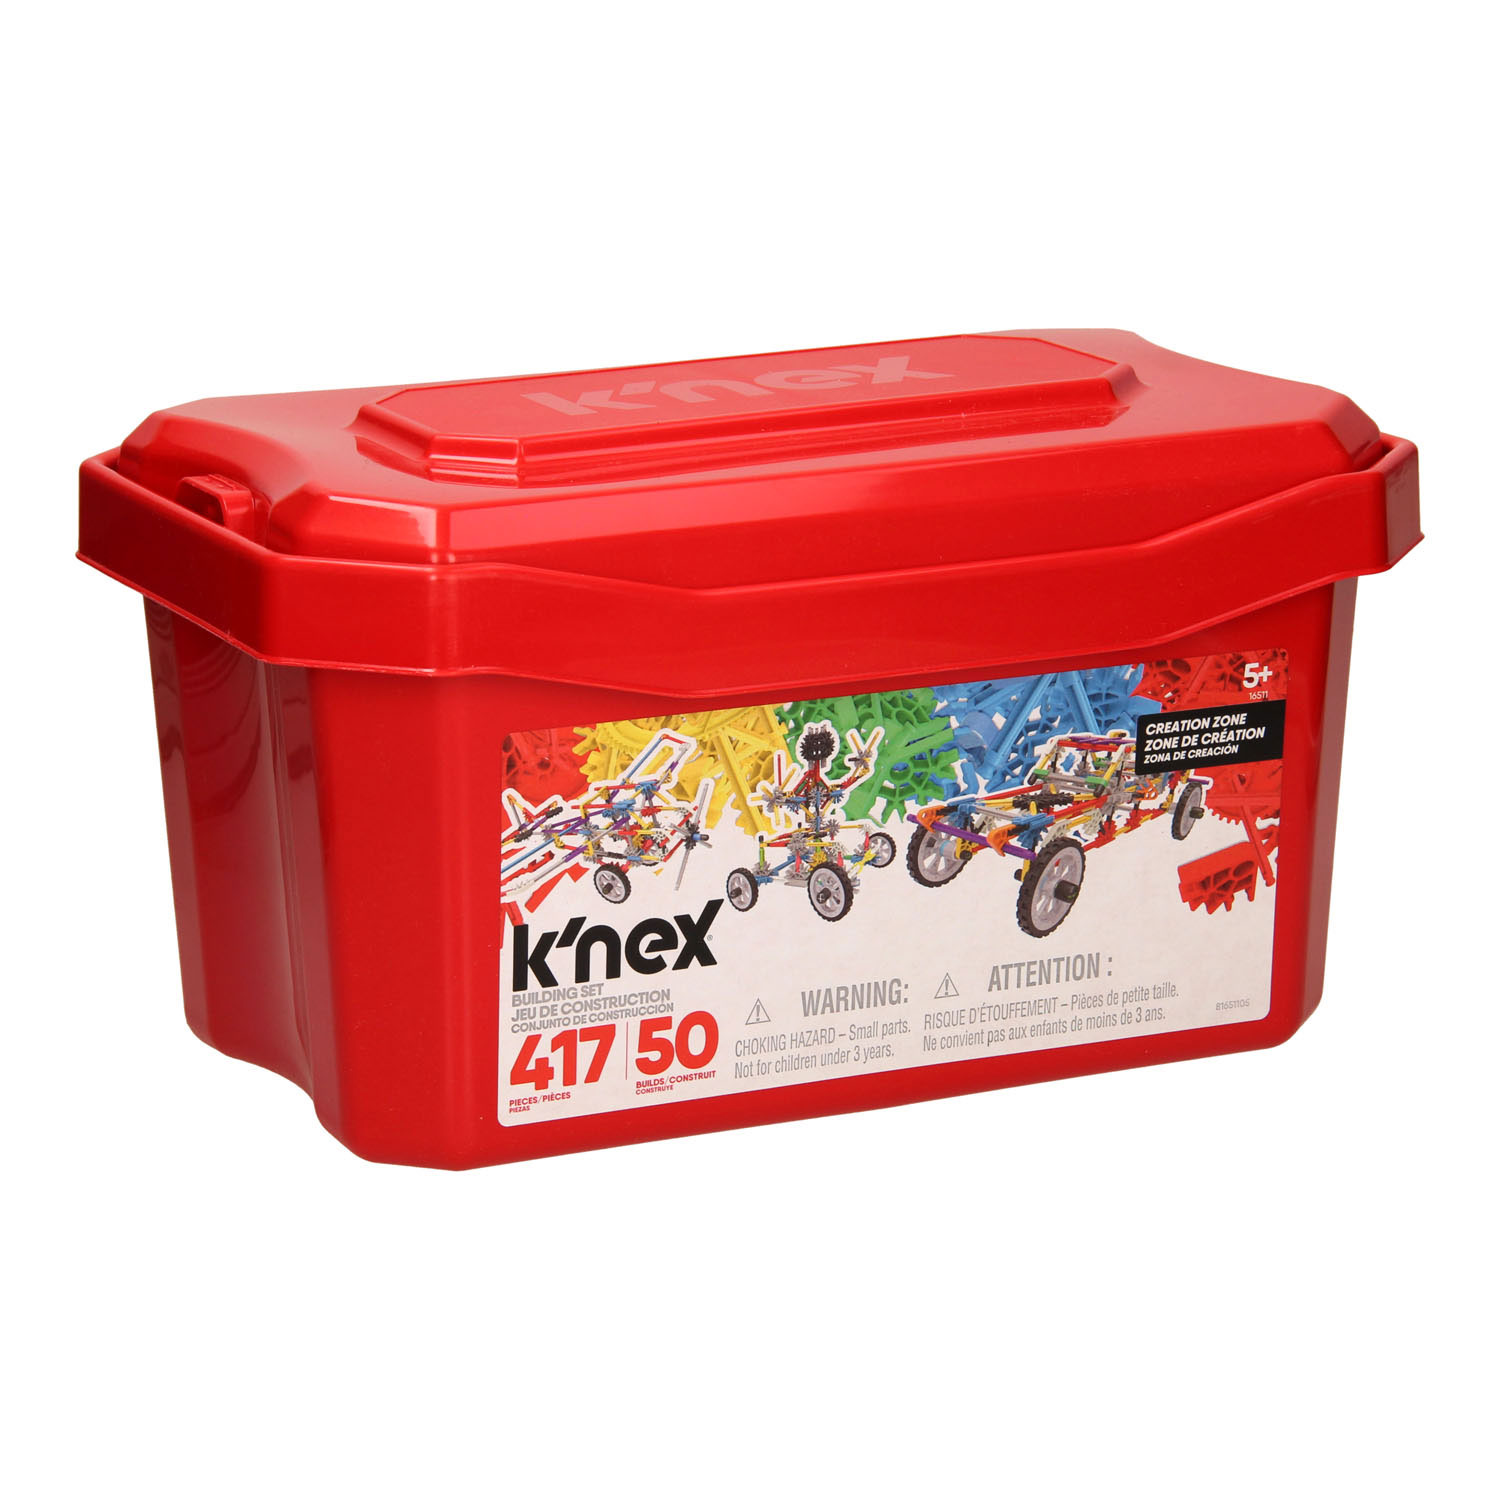 K'Nex Parts, Knex Spares & Replacement Missing Pieces UK